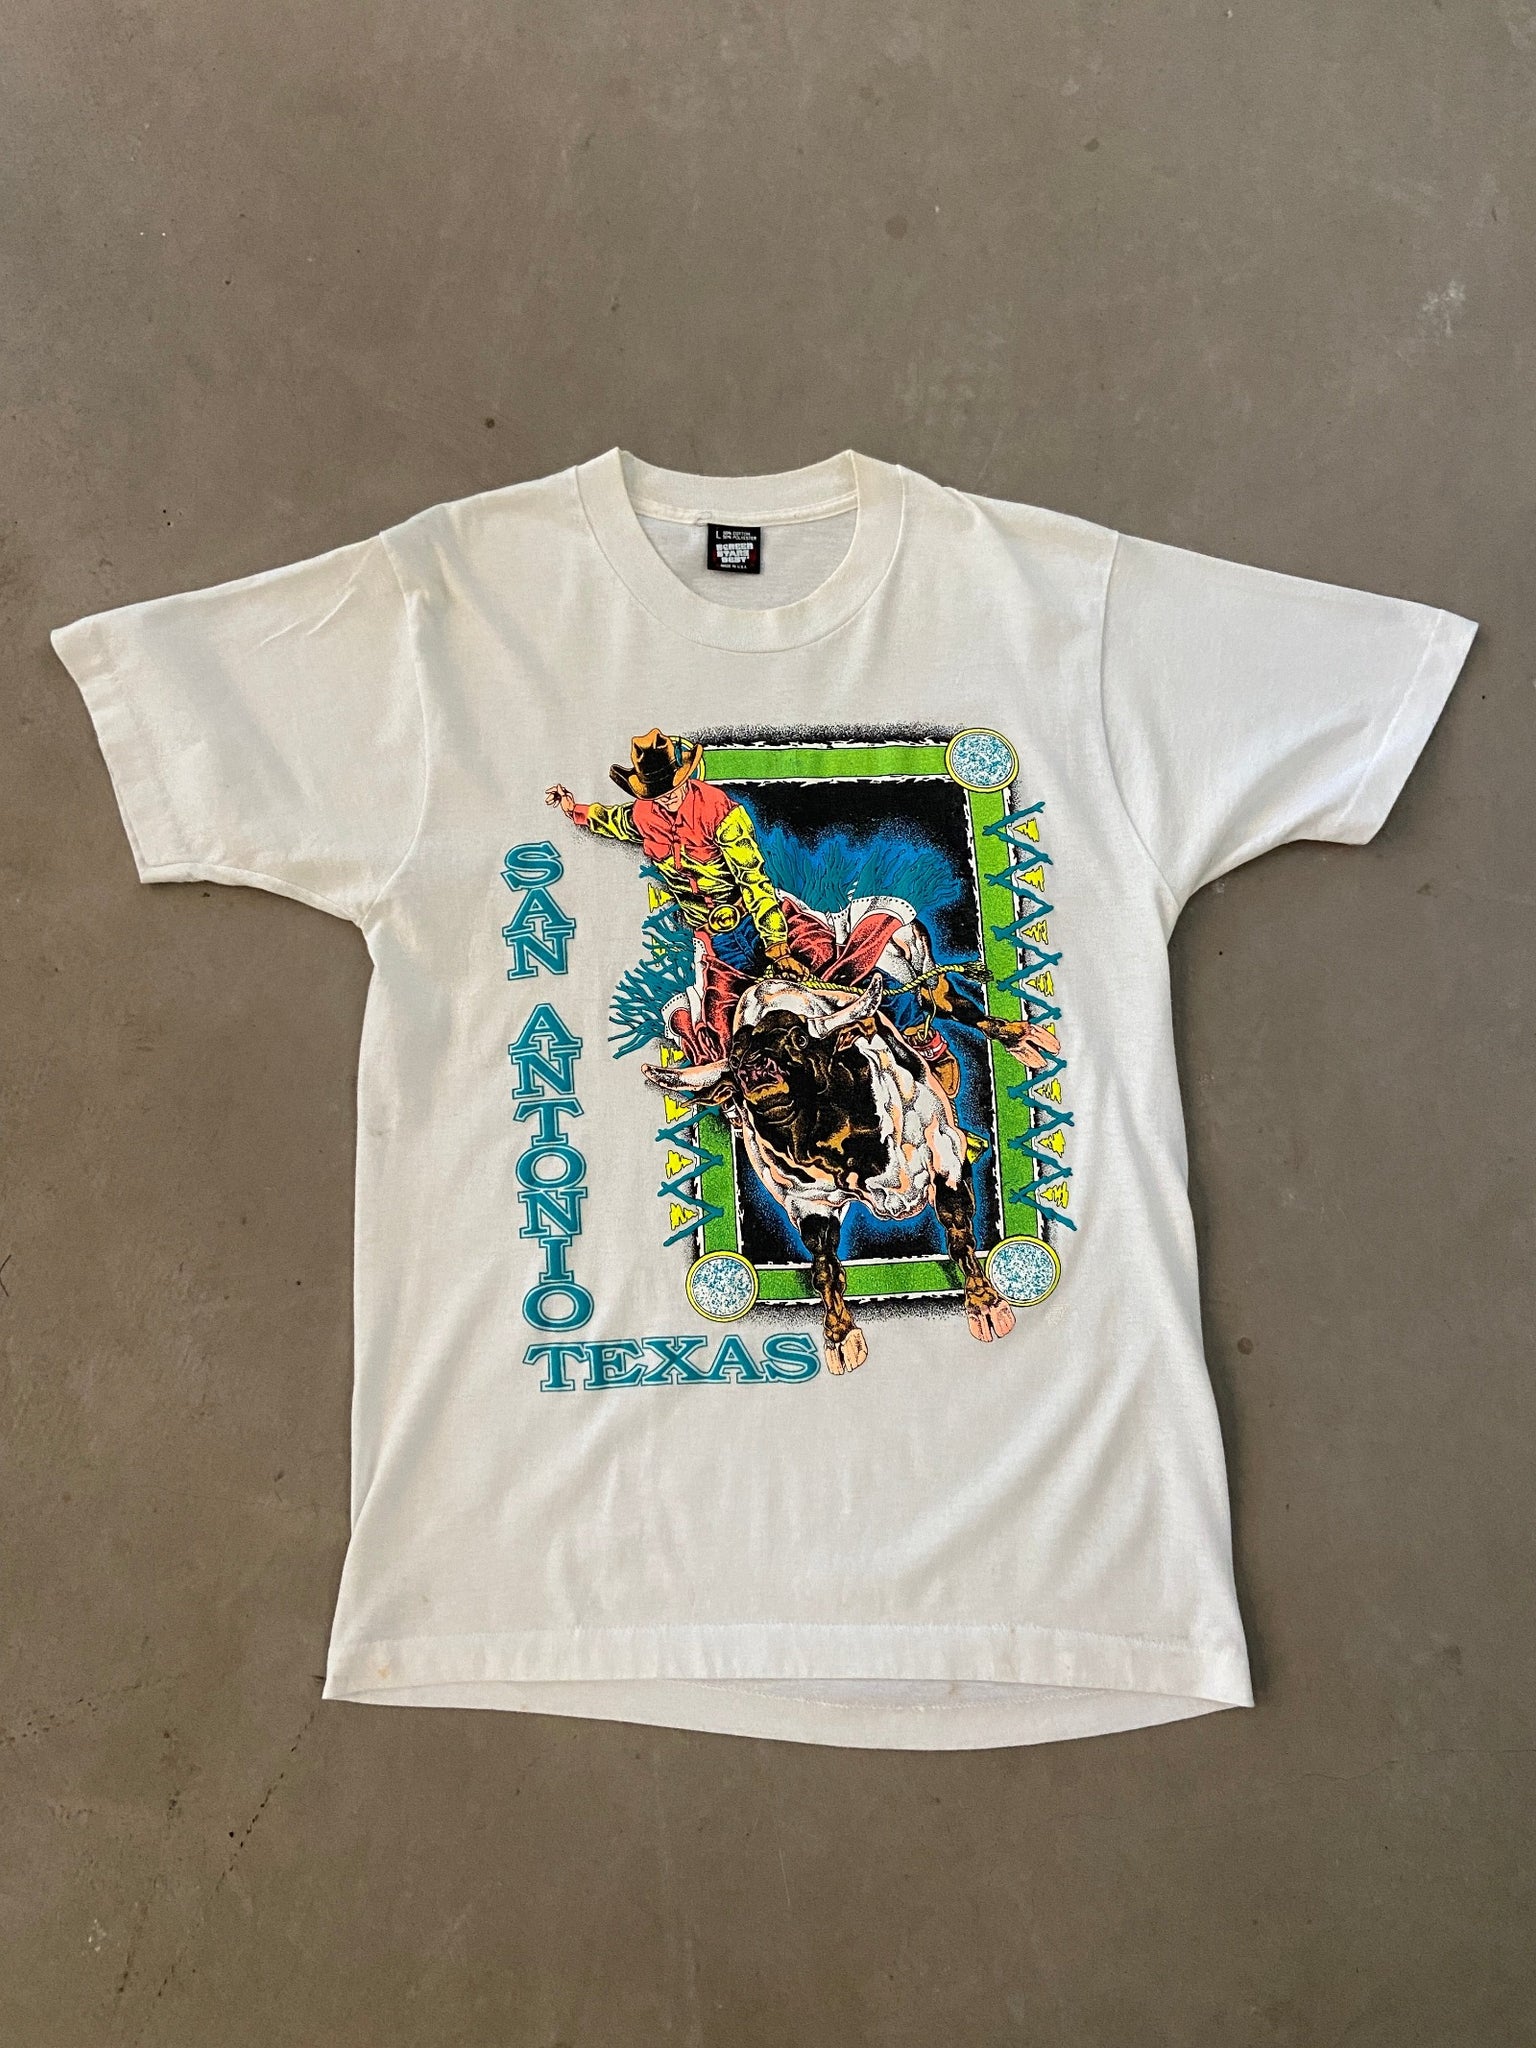 San Antonio Texas T-shirt - L